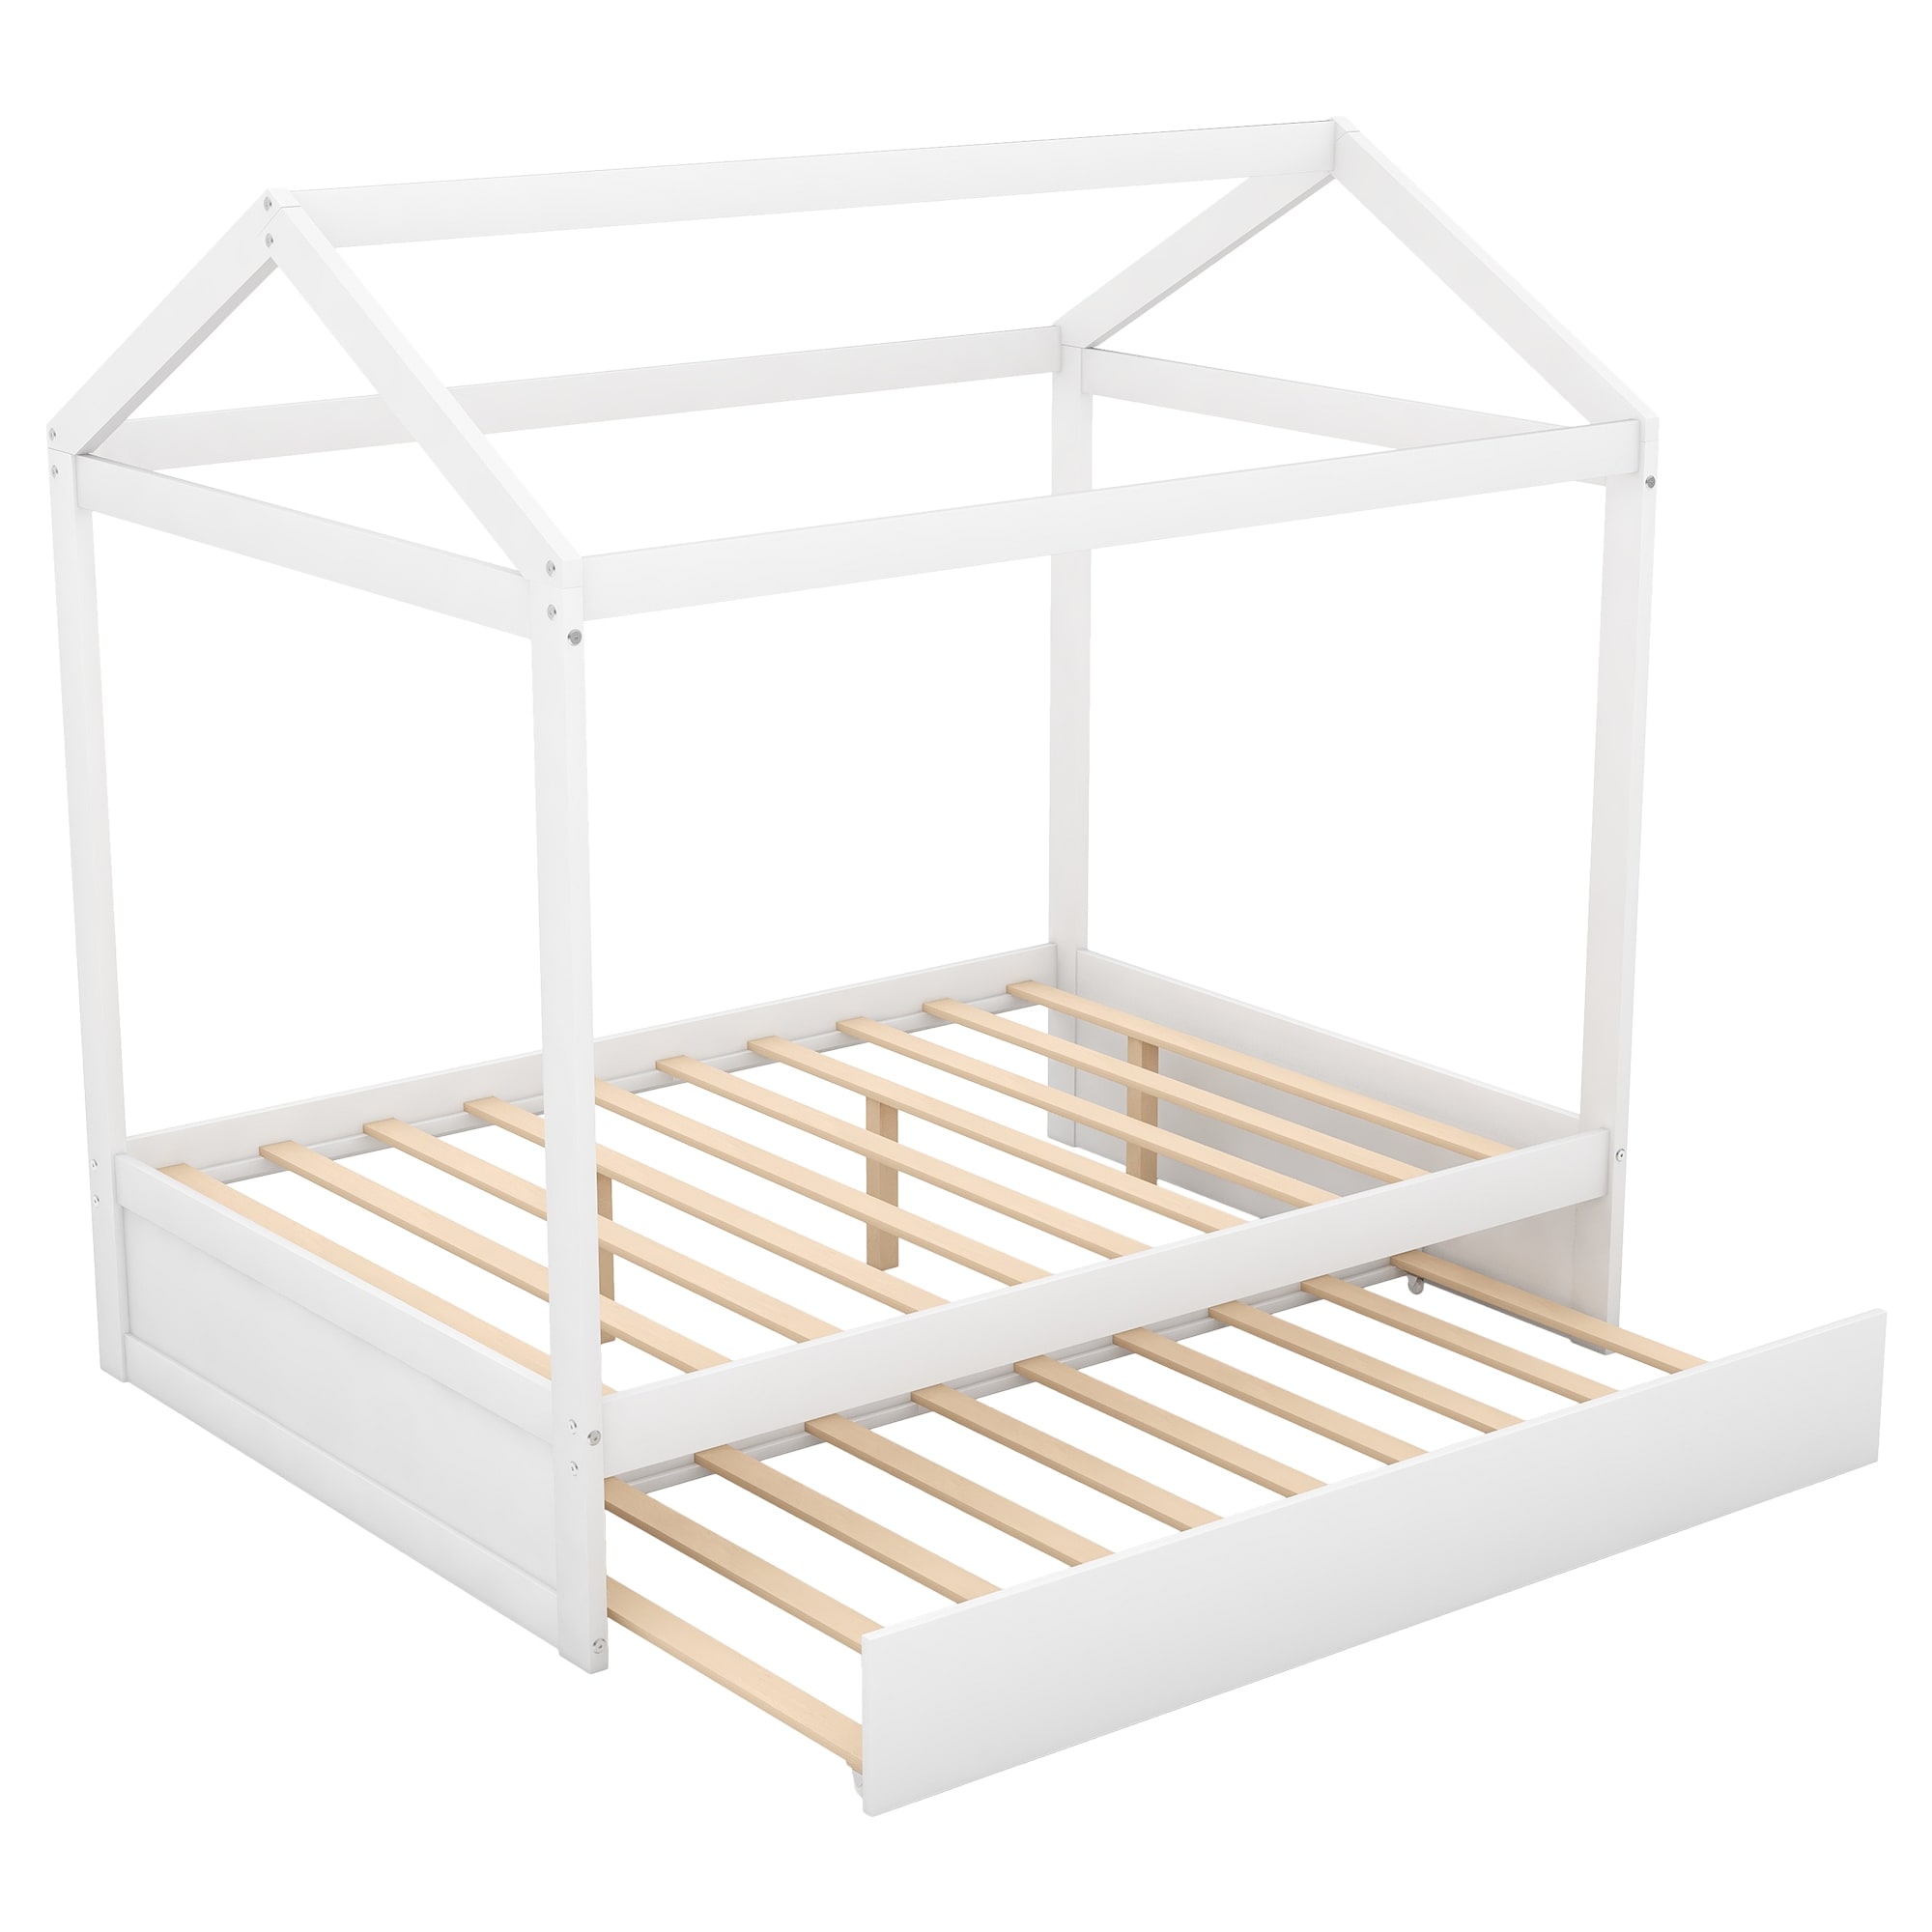 simplistic bed frame